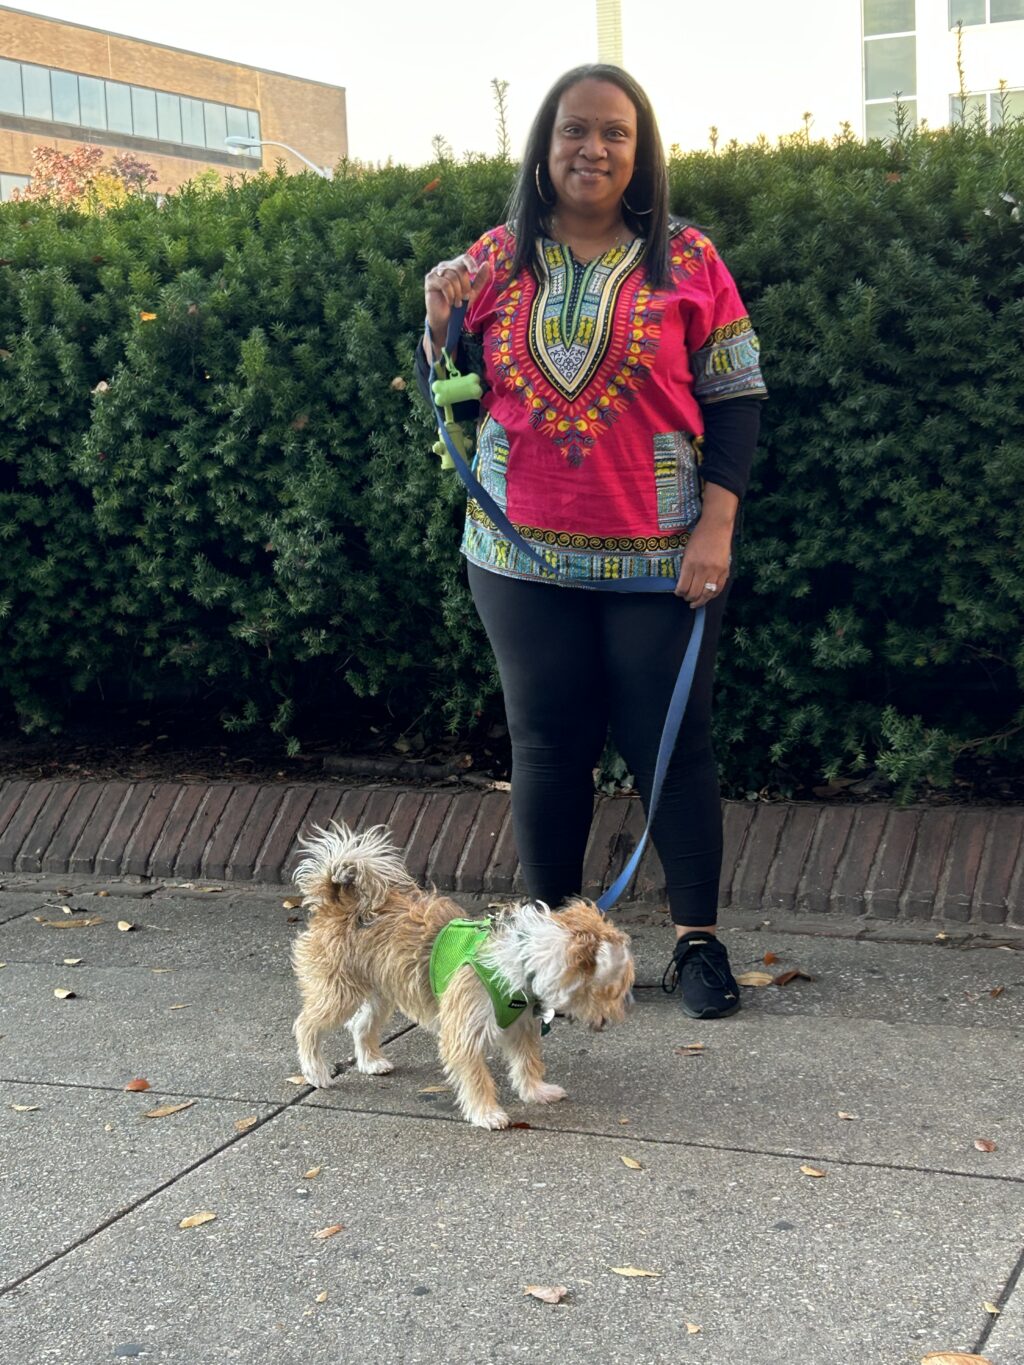 A woman is walking her dog on the sidewalk